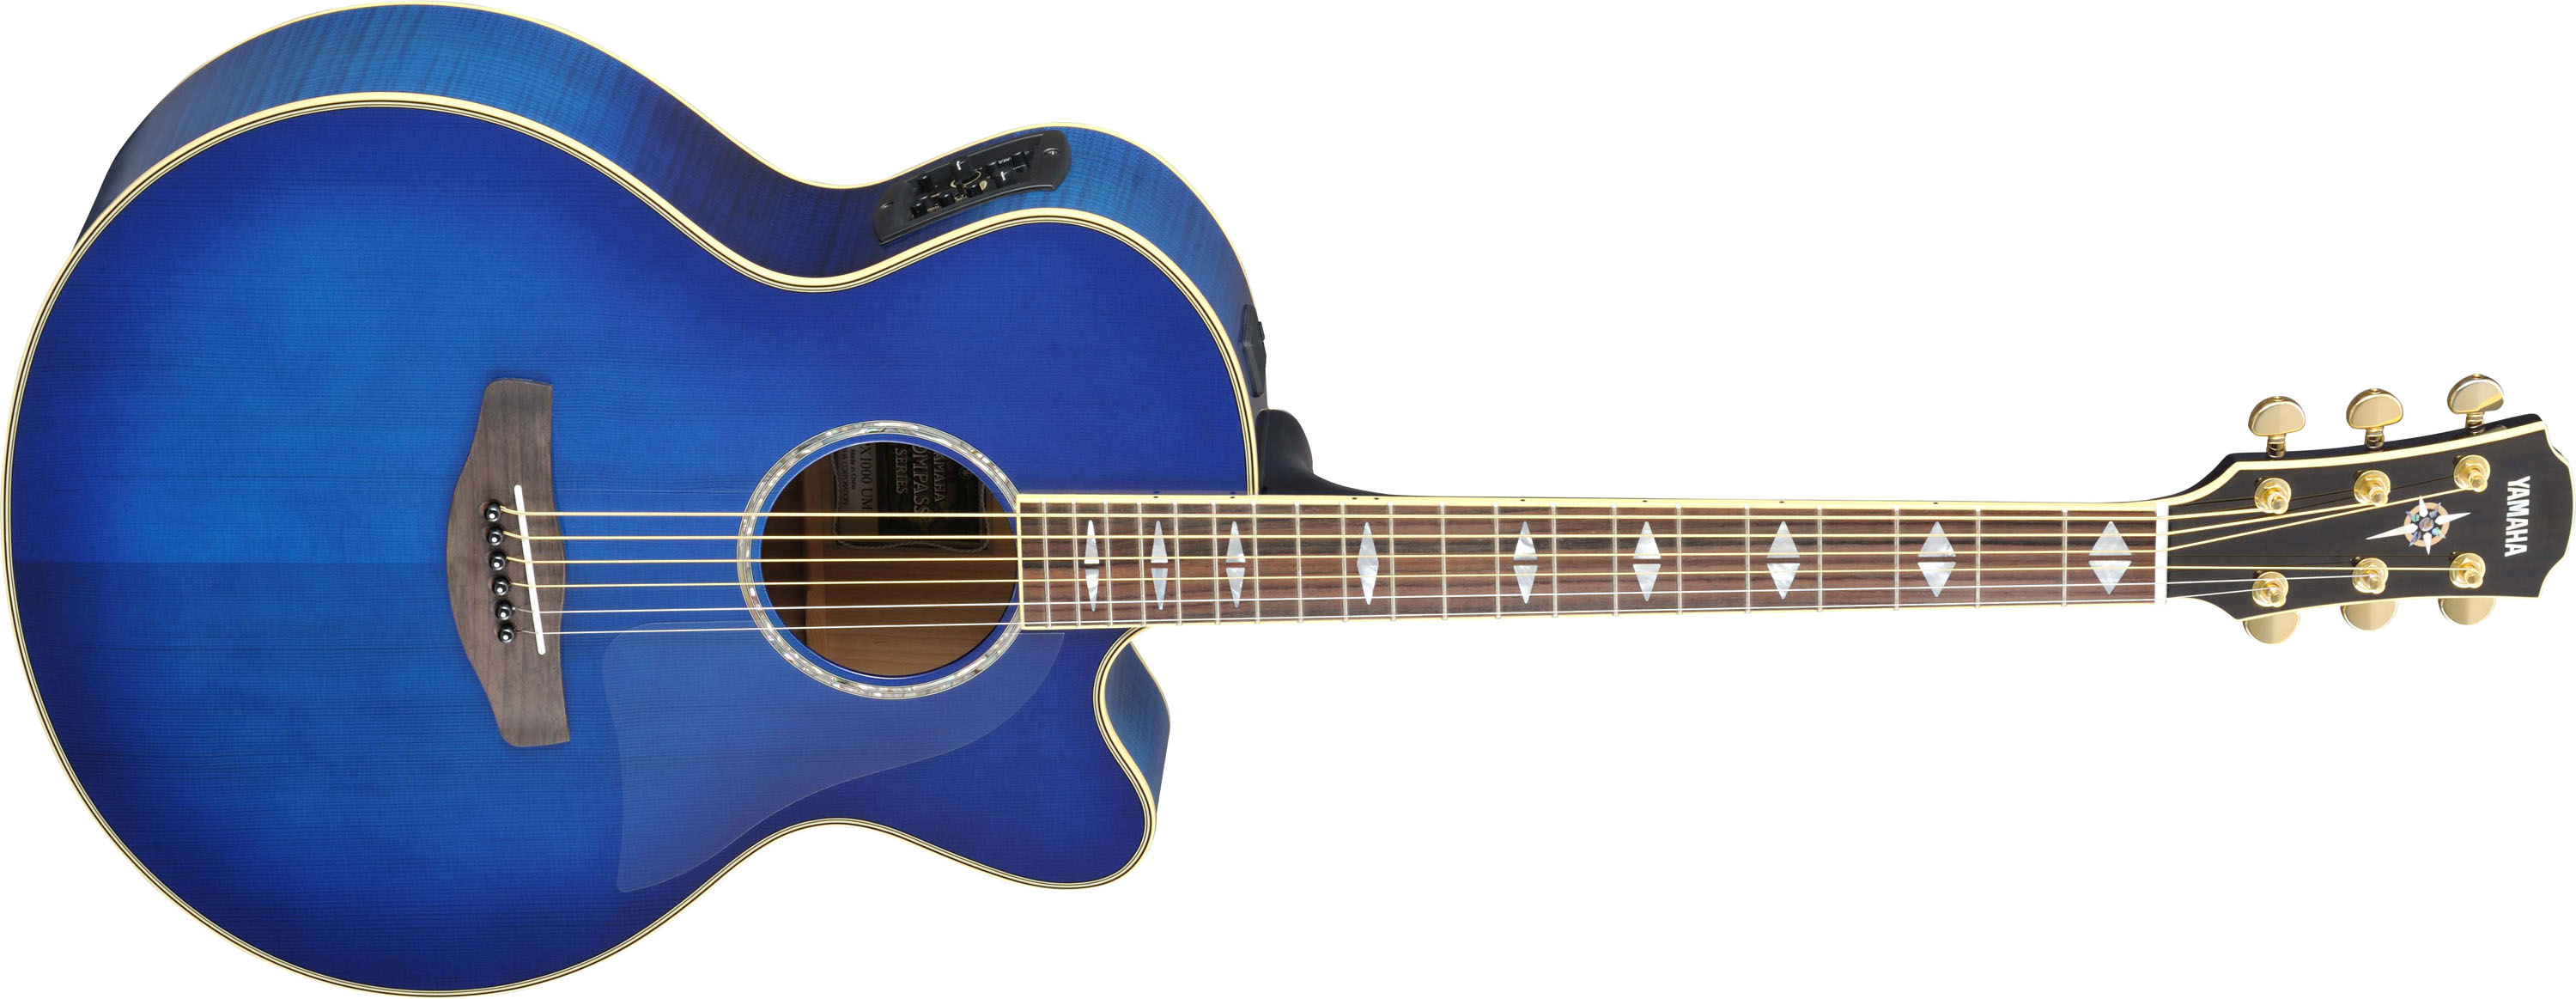 Yamaha Cpx1000 - Ultramarine - Elektroakustische Gitarre - Variation 1